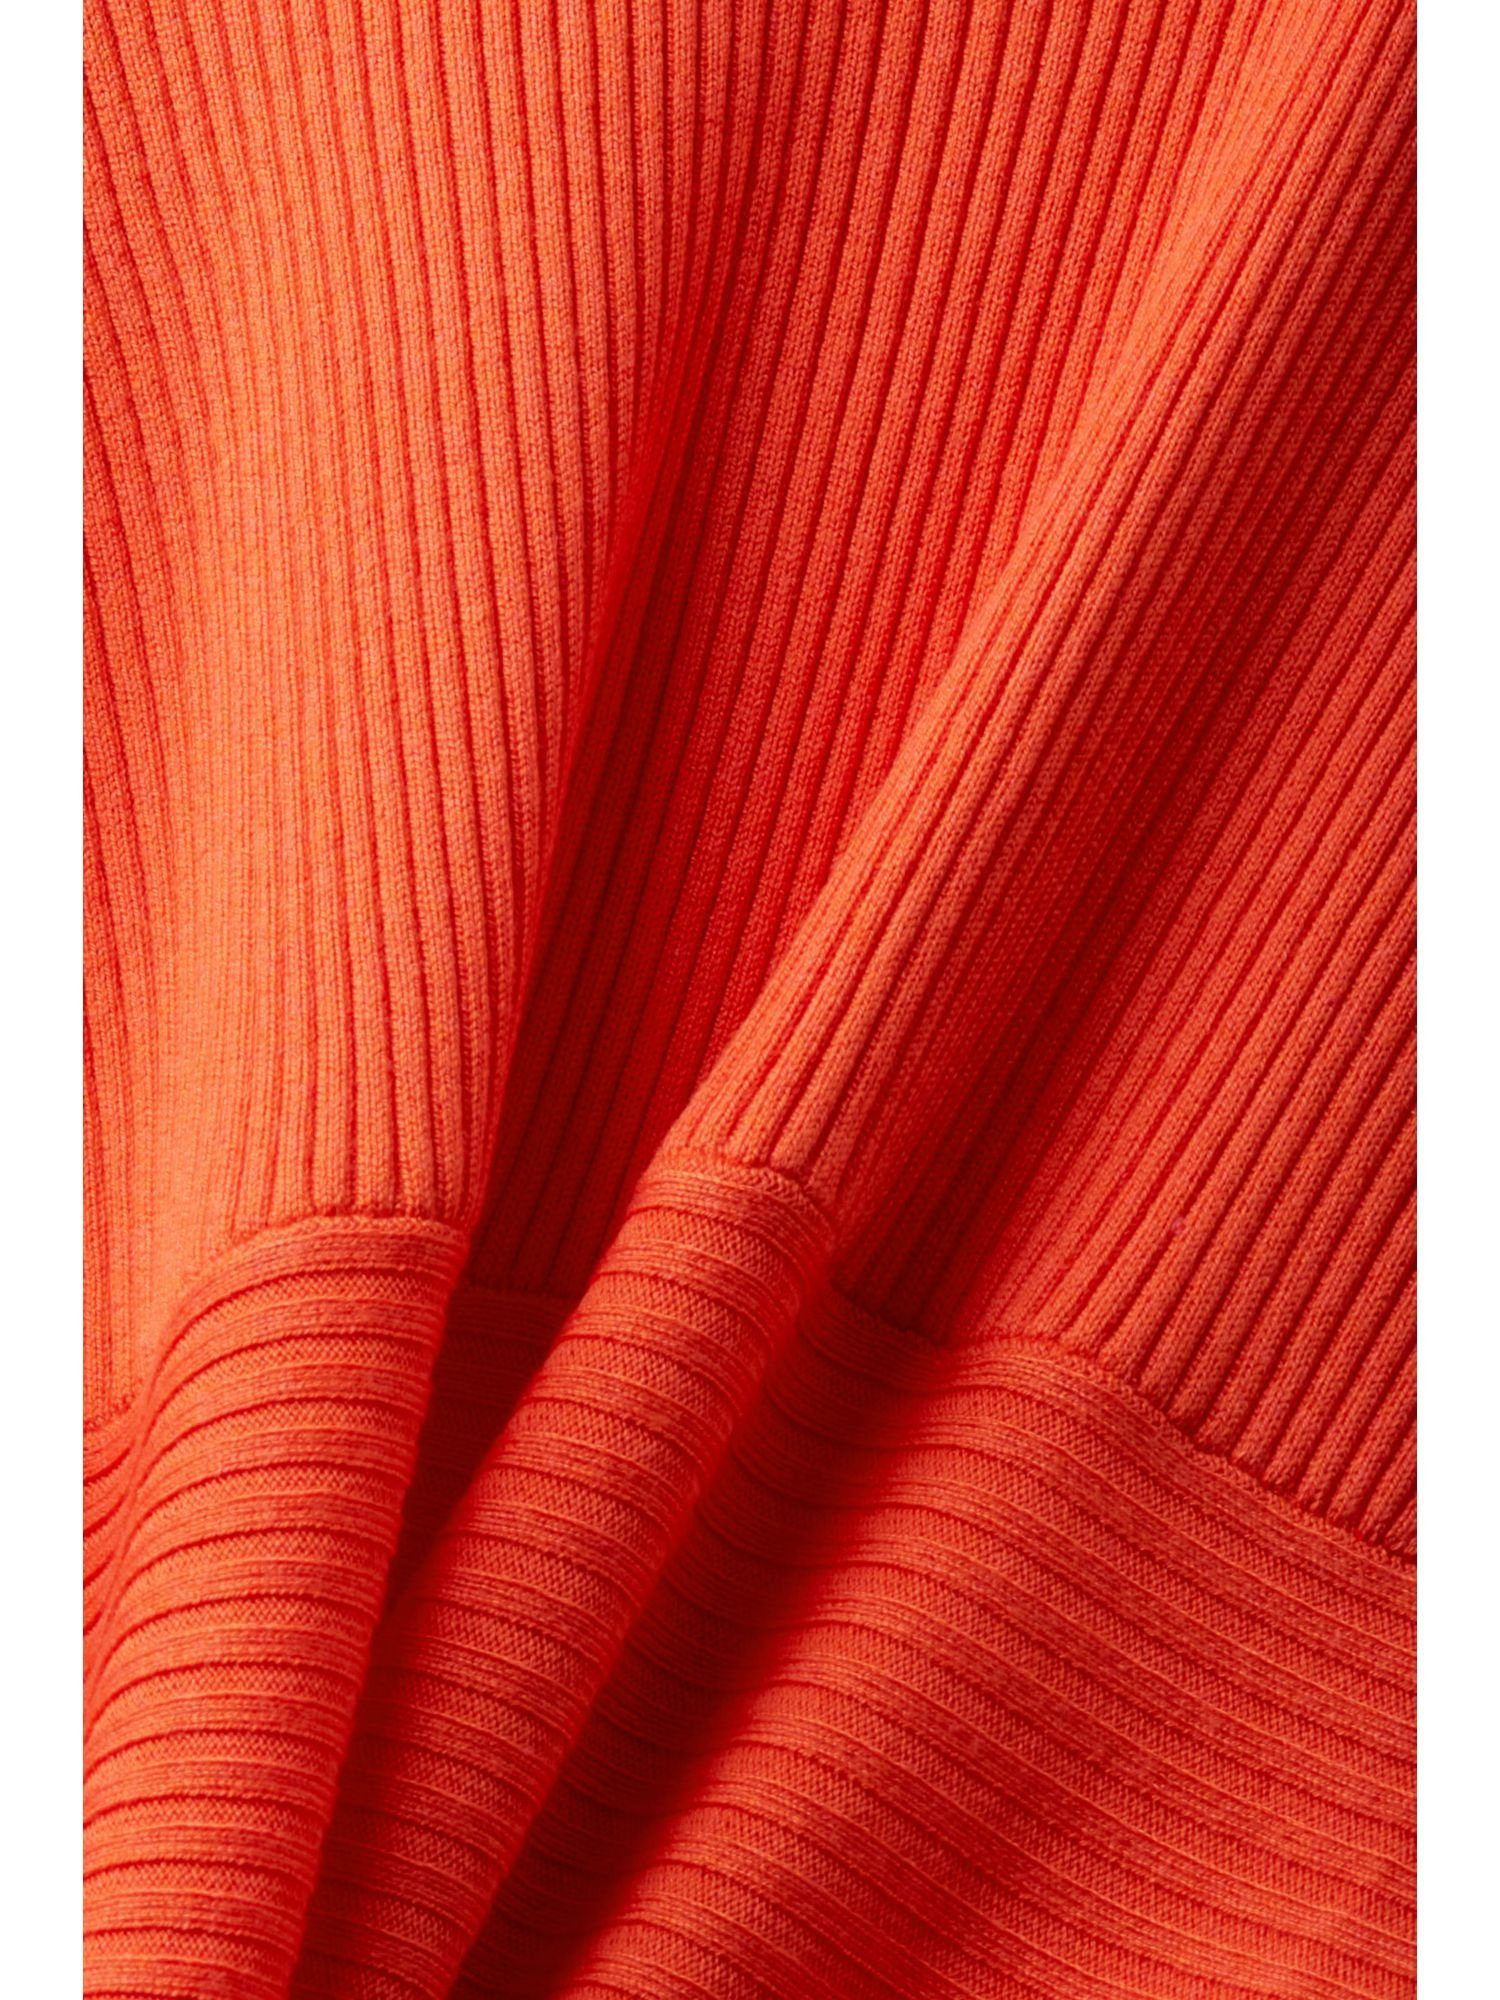 Strickjacke Zipfelsaum RED mit Gerippter ORANGE (1-tlg) Cardigan Esprit